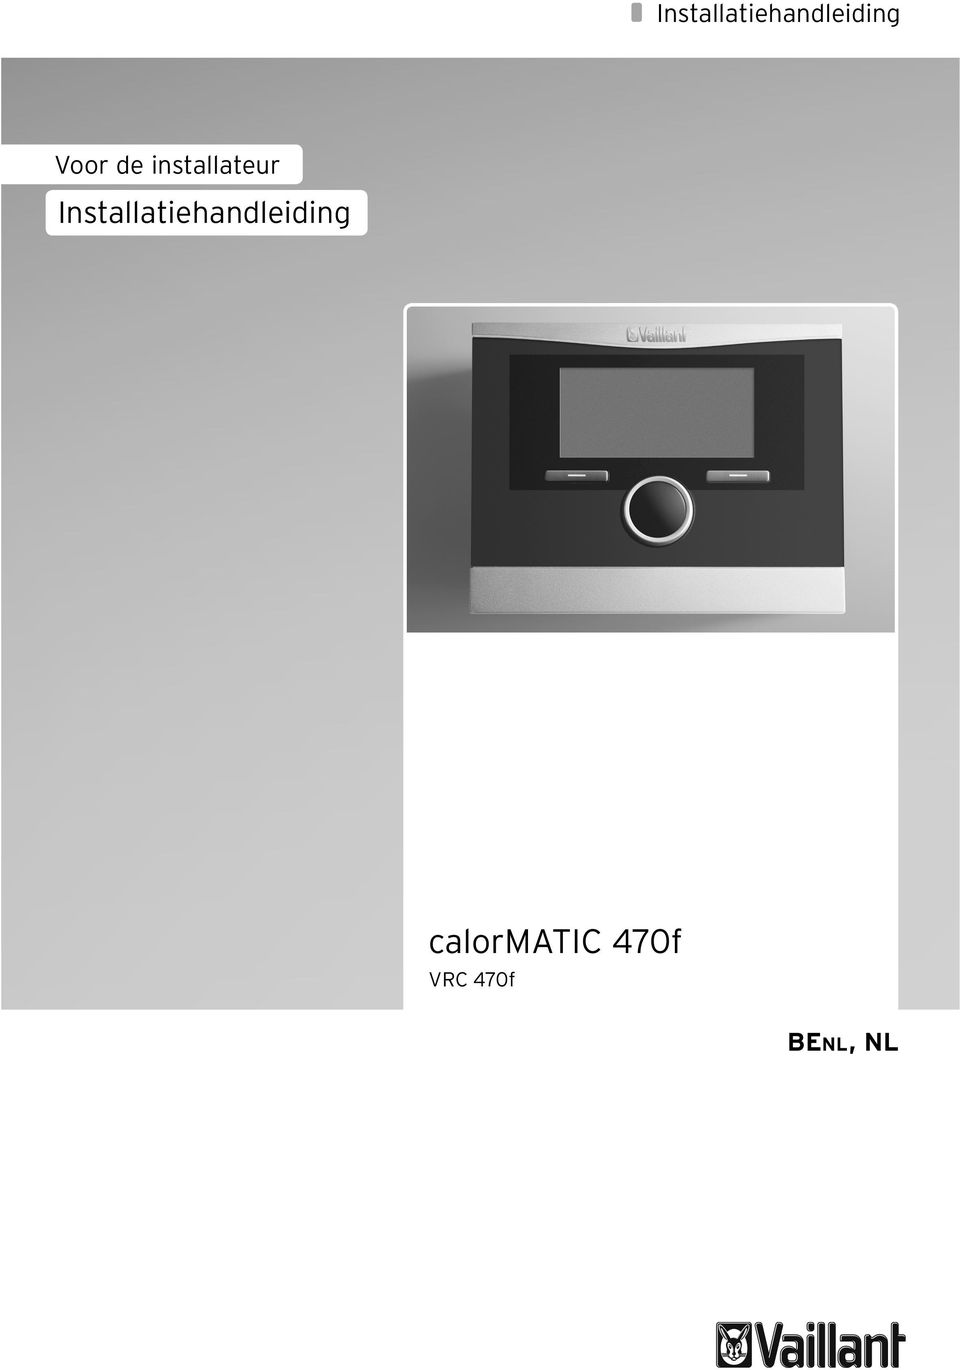 calormatic 470f VRC 470f